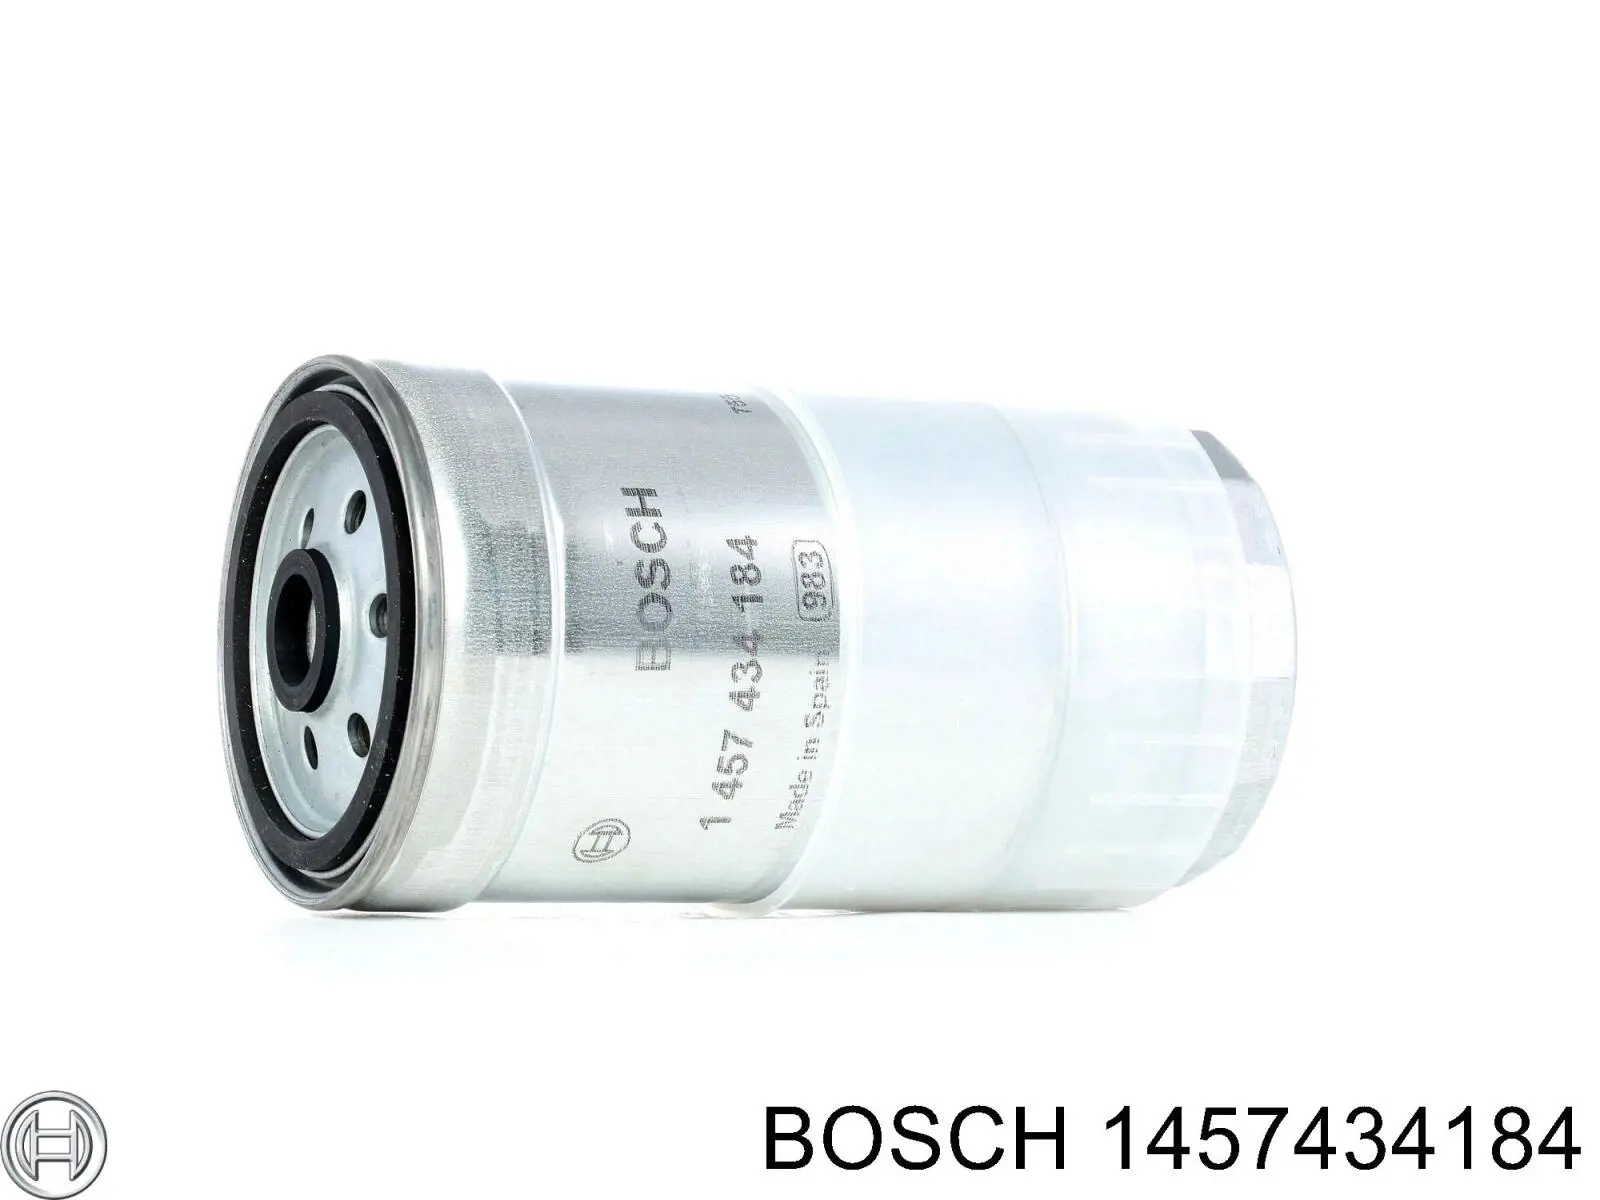 1457434184 Bosch filtro combustible